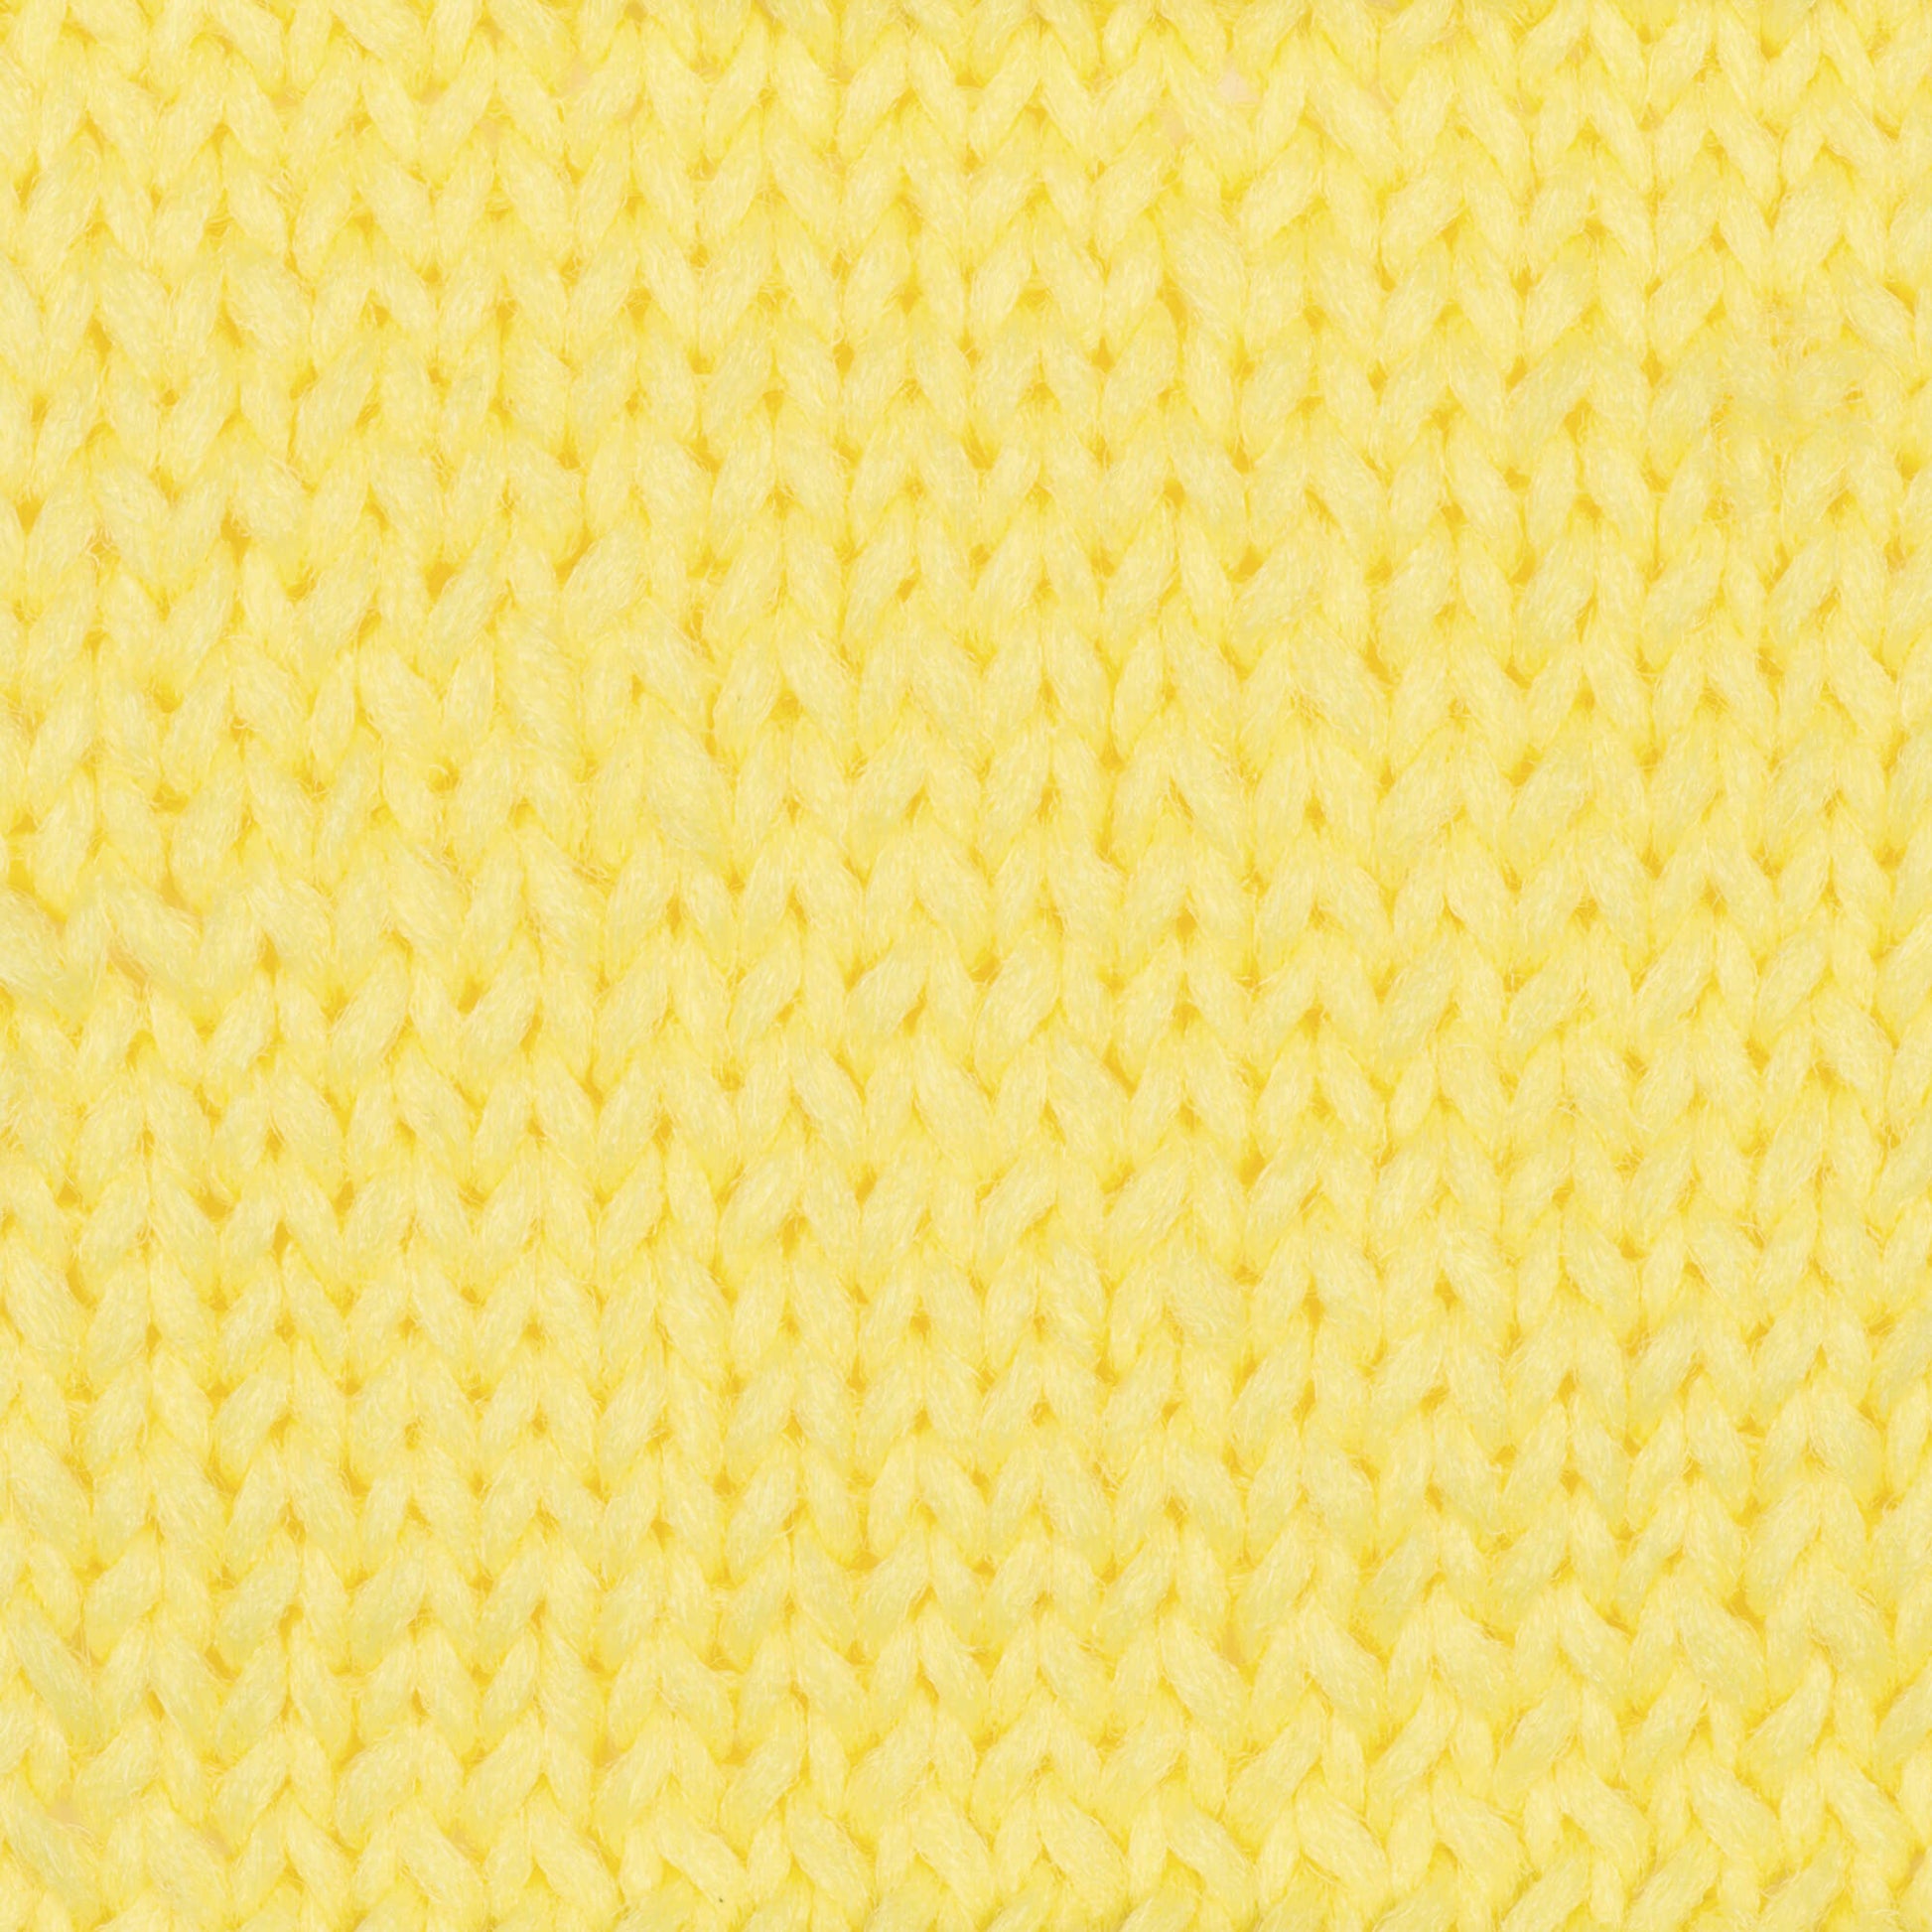 Phentex Slipper & Craft Yarn - Discontinued Shades Bumble Bee Yellow